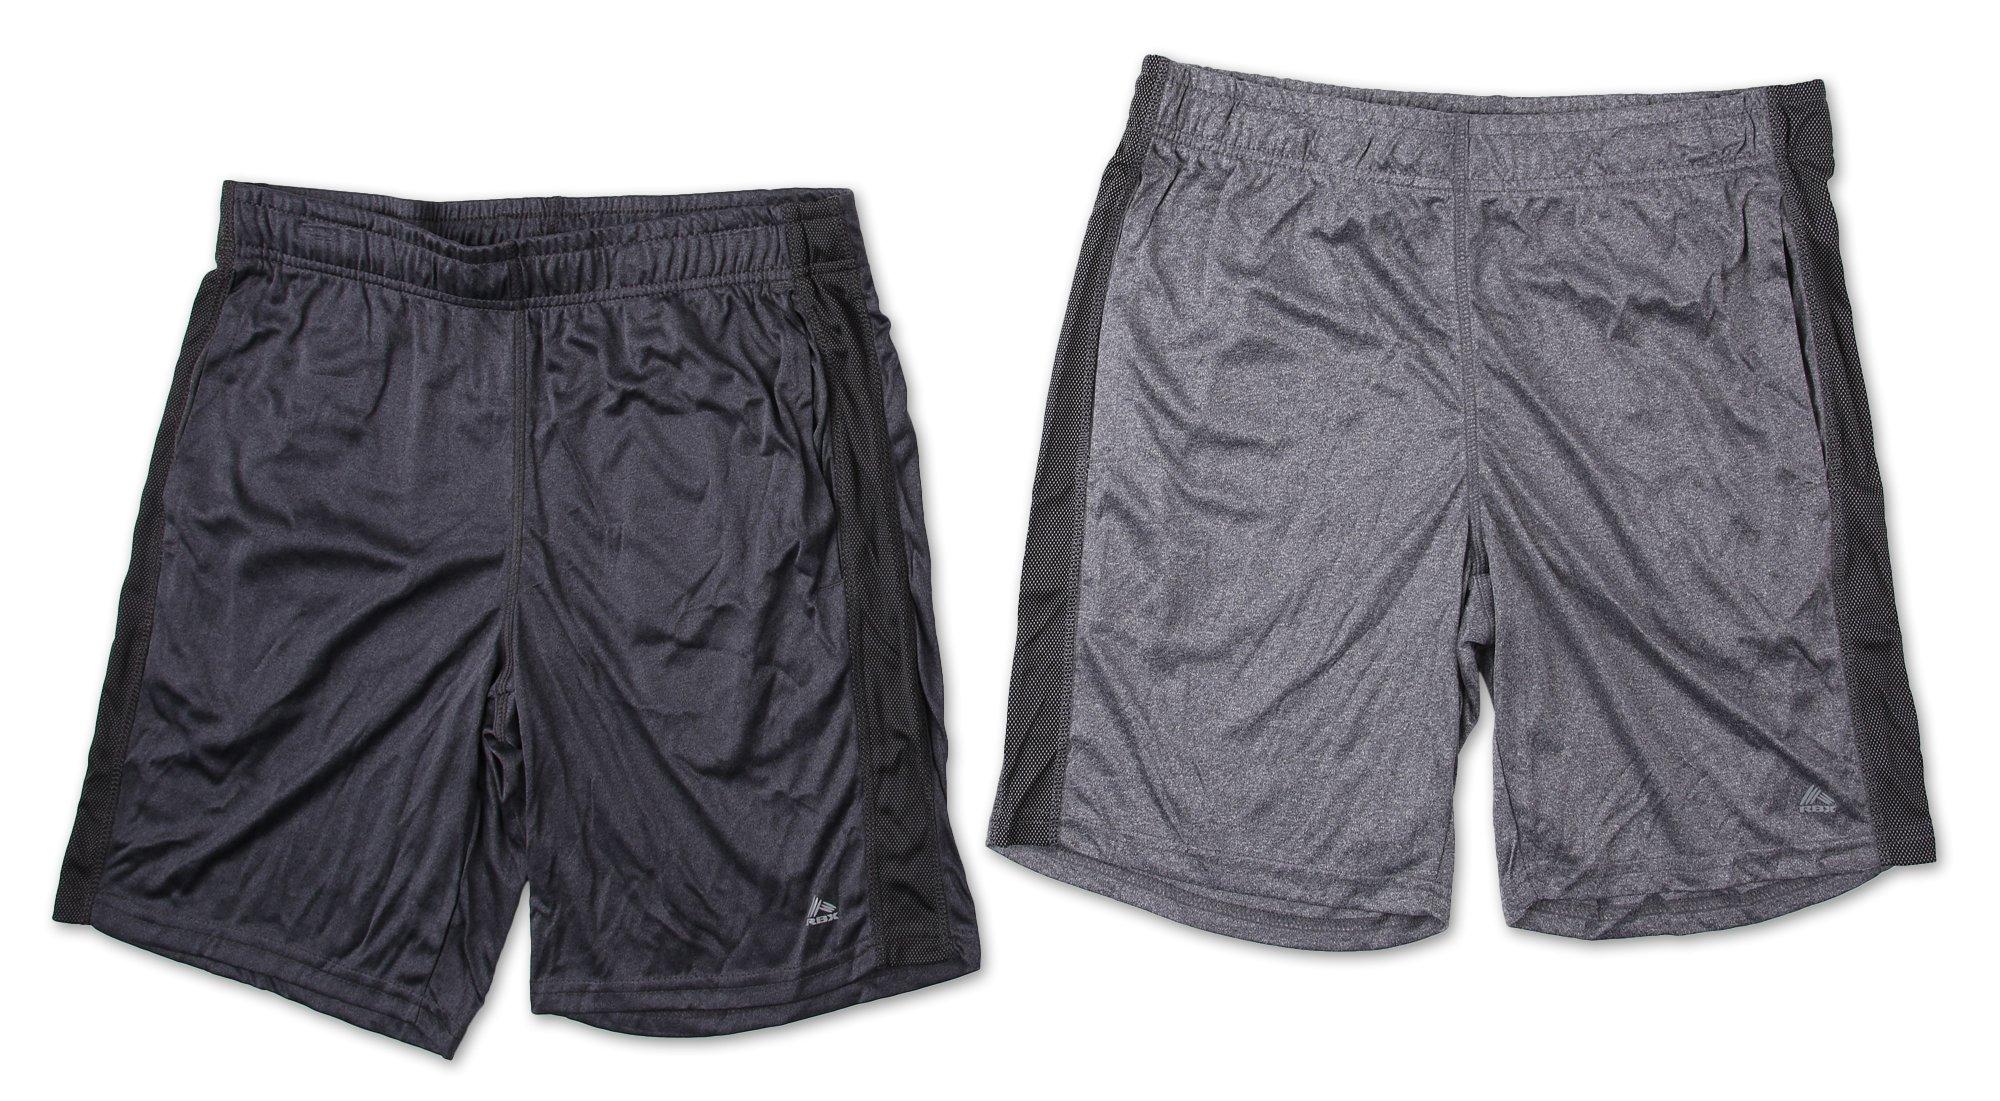 Men's Active 2 Pk Shorts